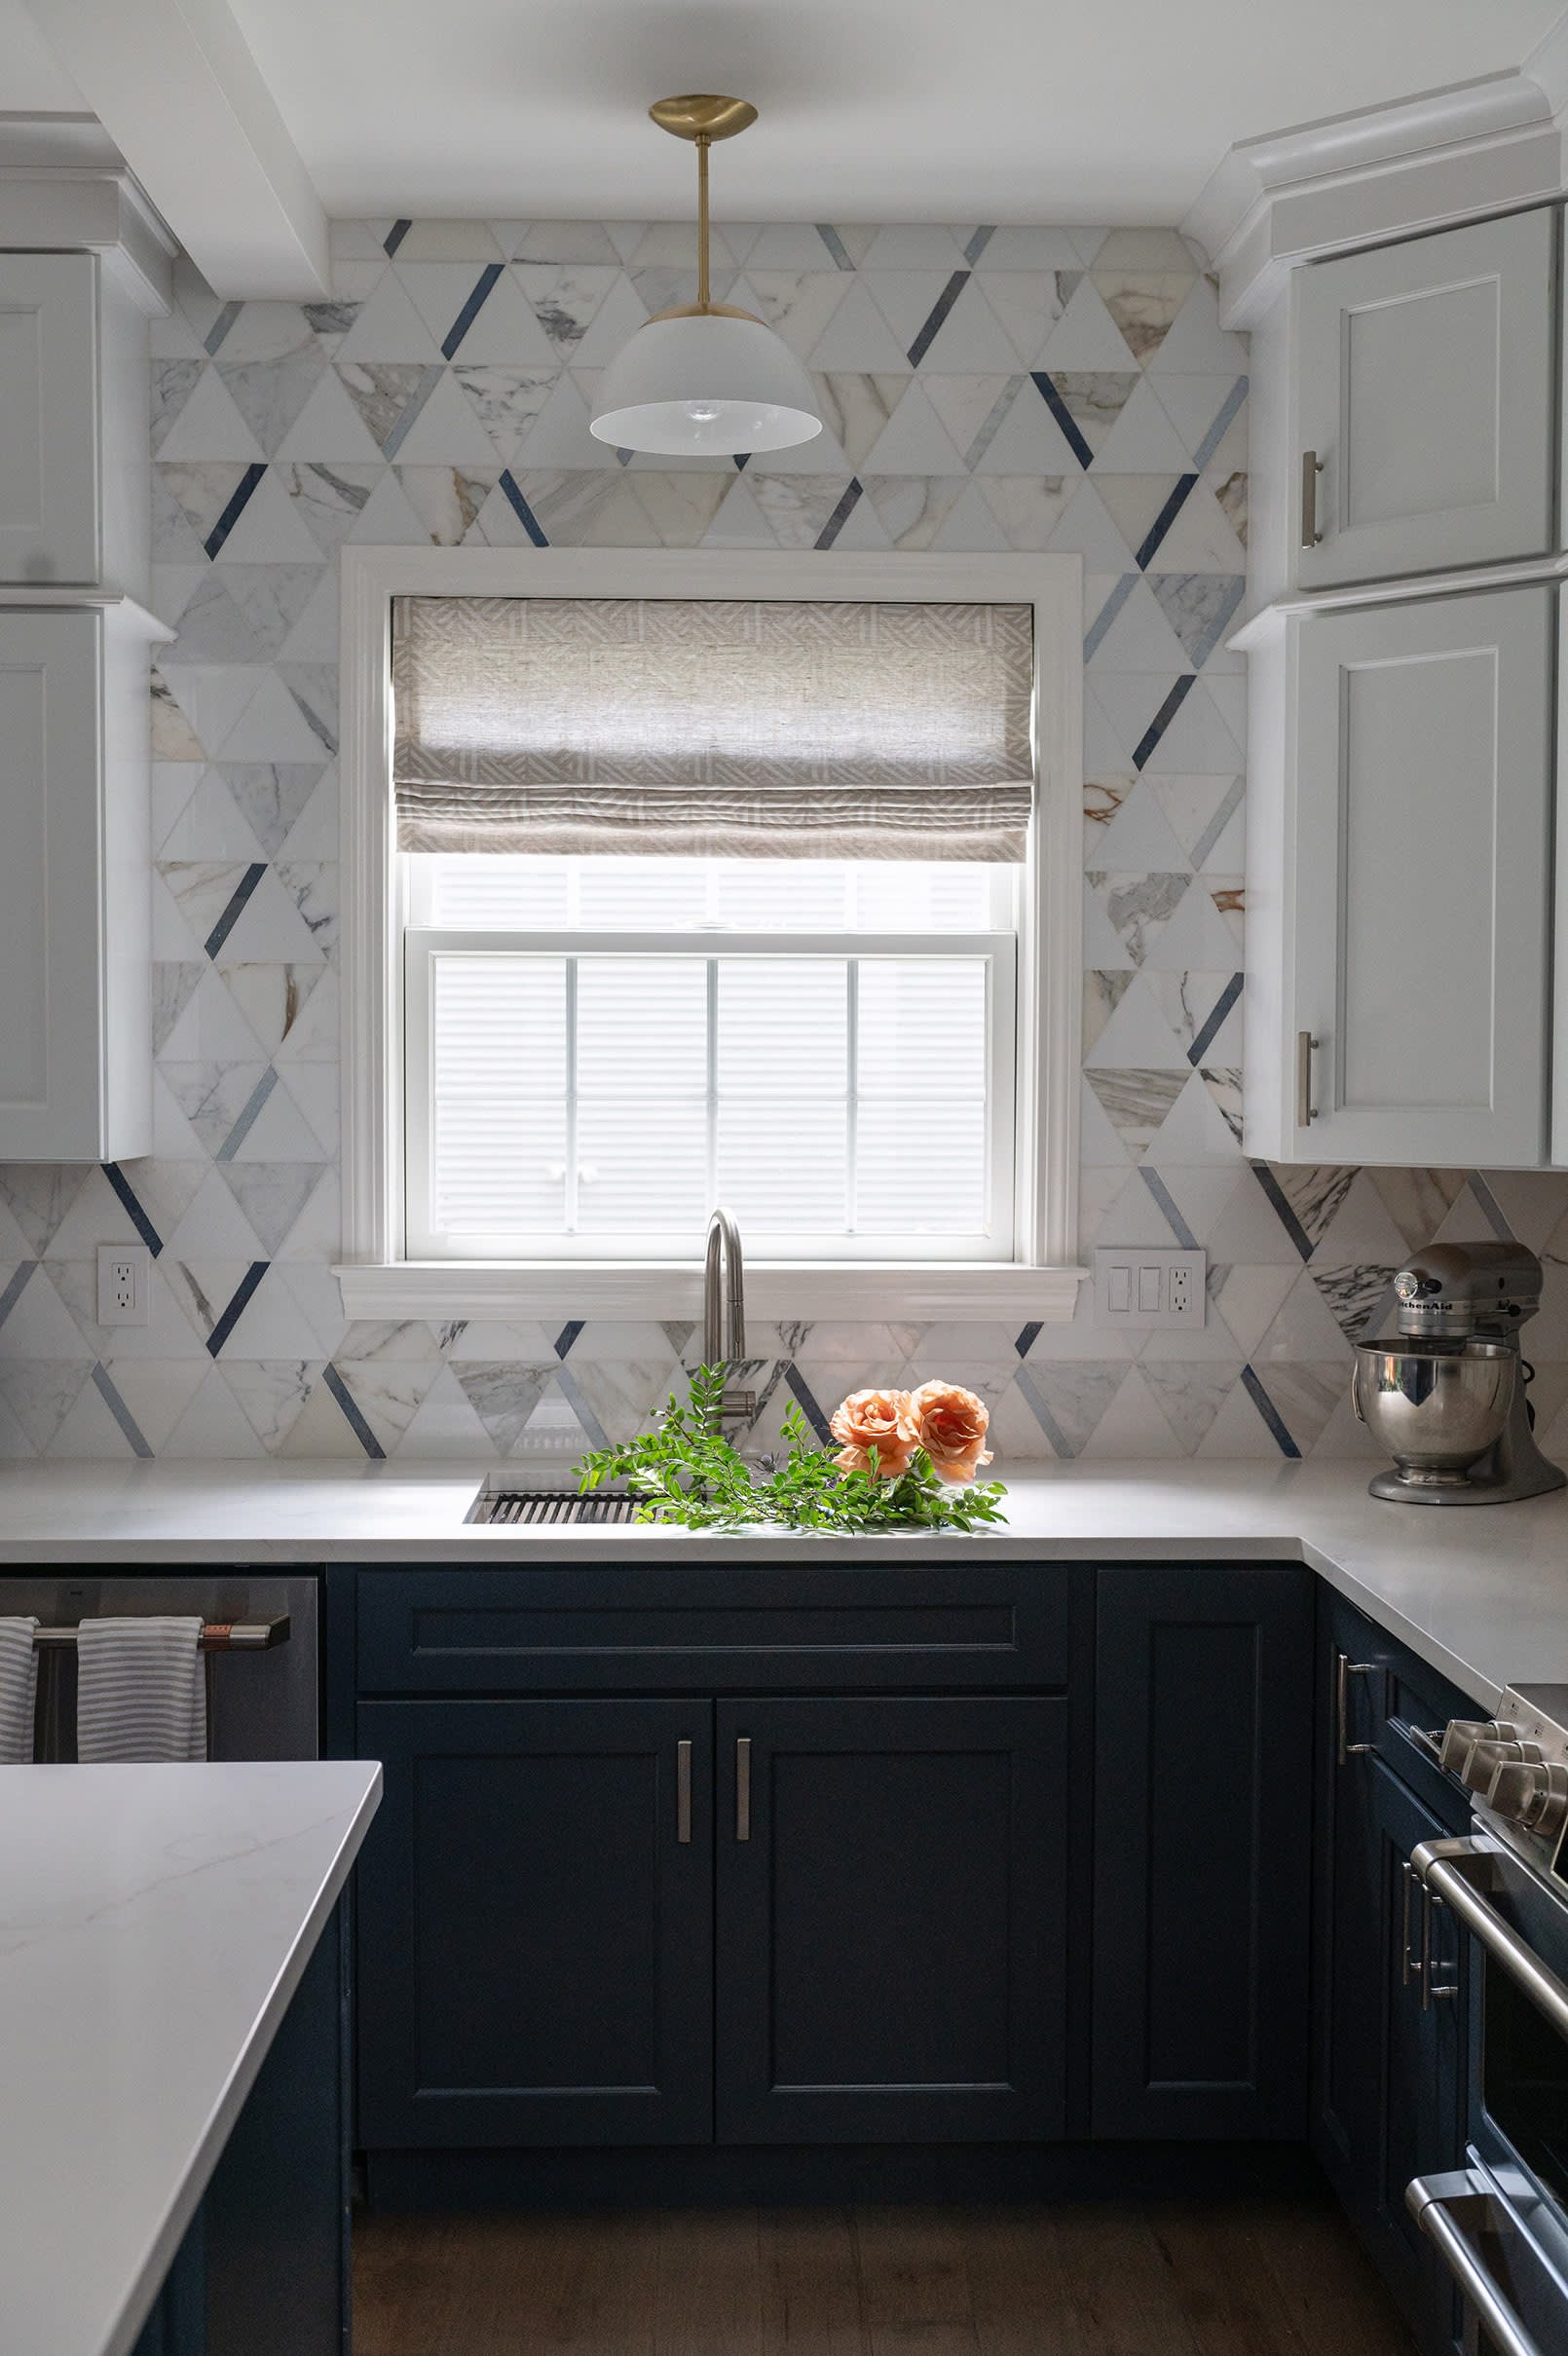 https://cdn.apartmenttherapy.info/image/upload/v1694185336/at/style/2023-09/kitchen-room-trends/striking-tile.jpg